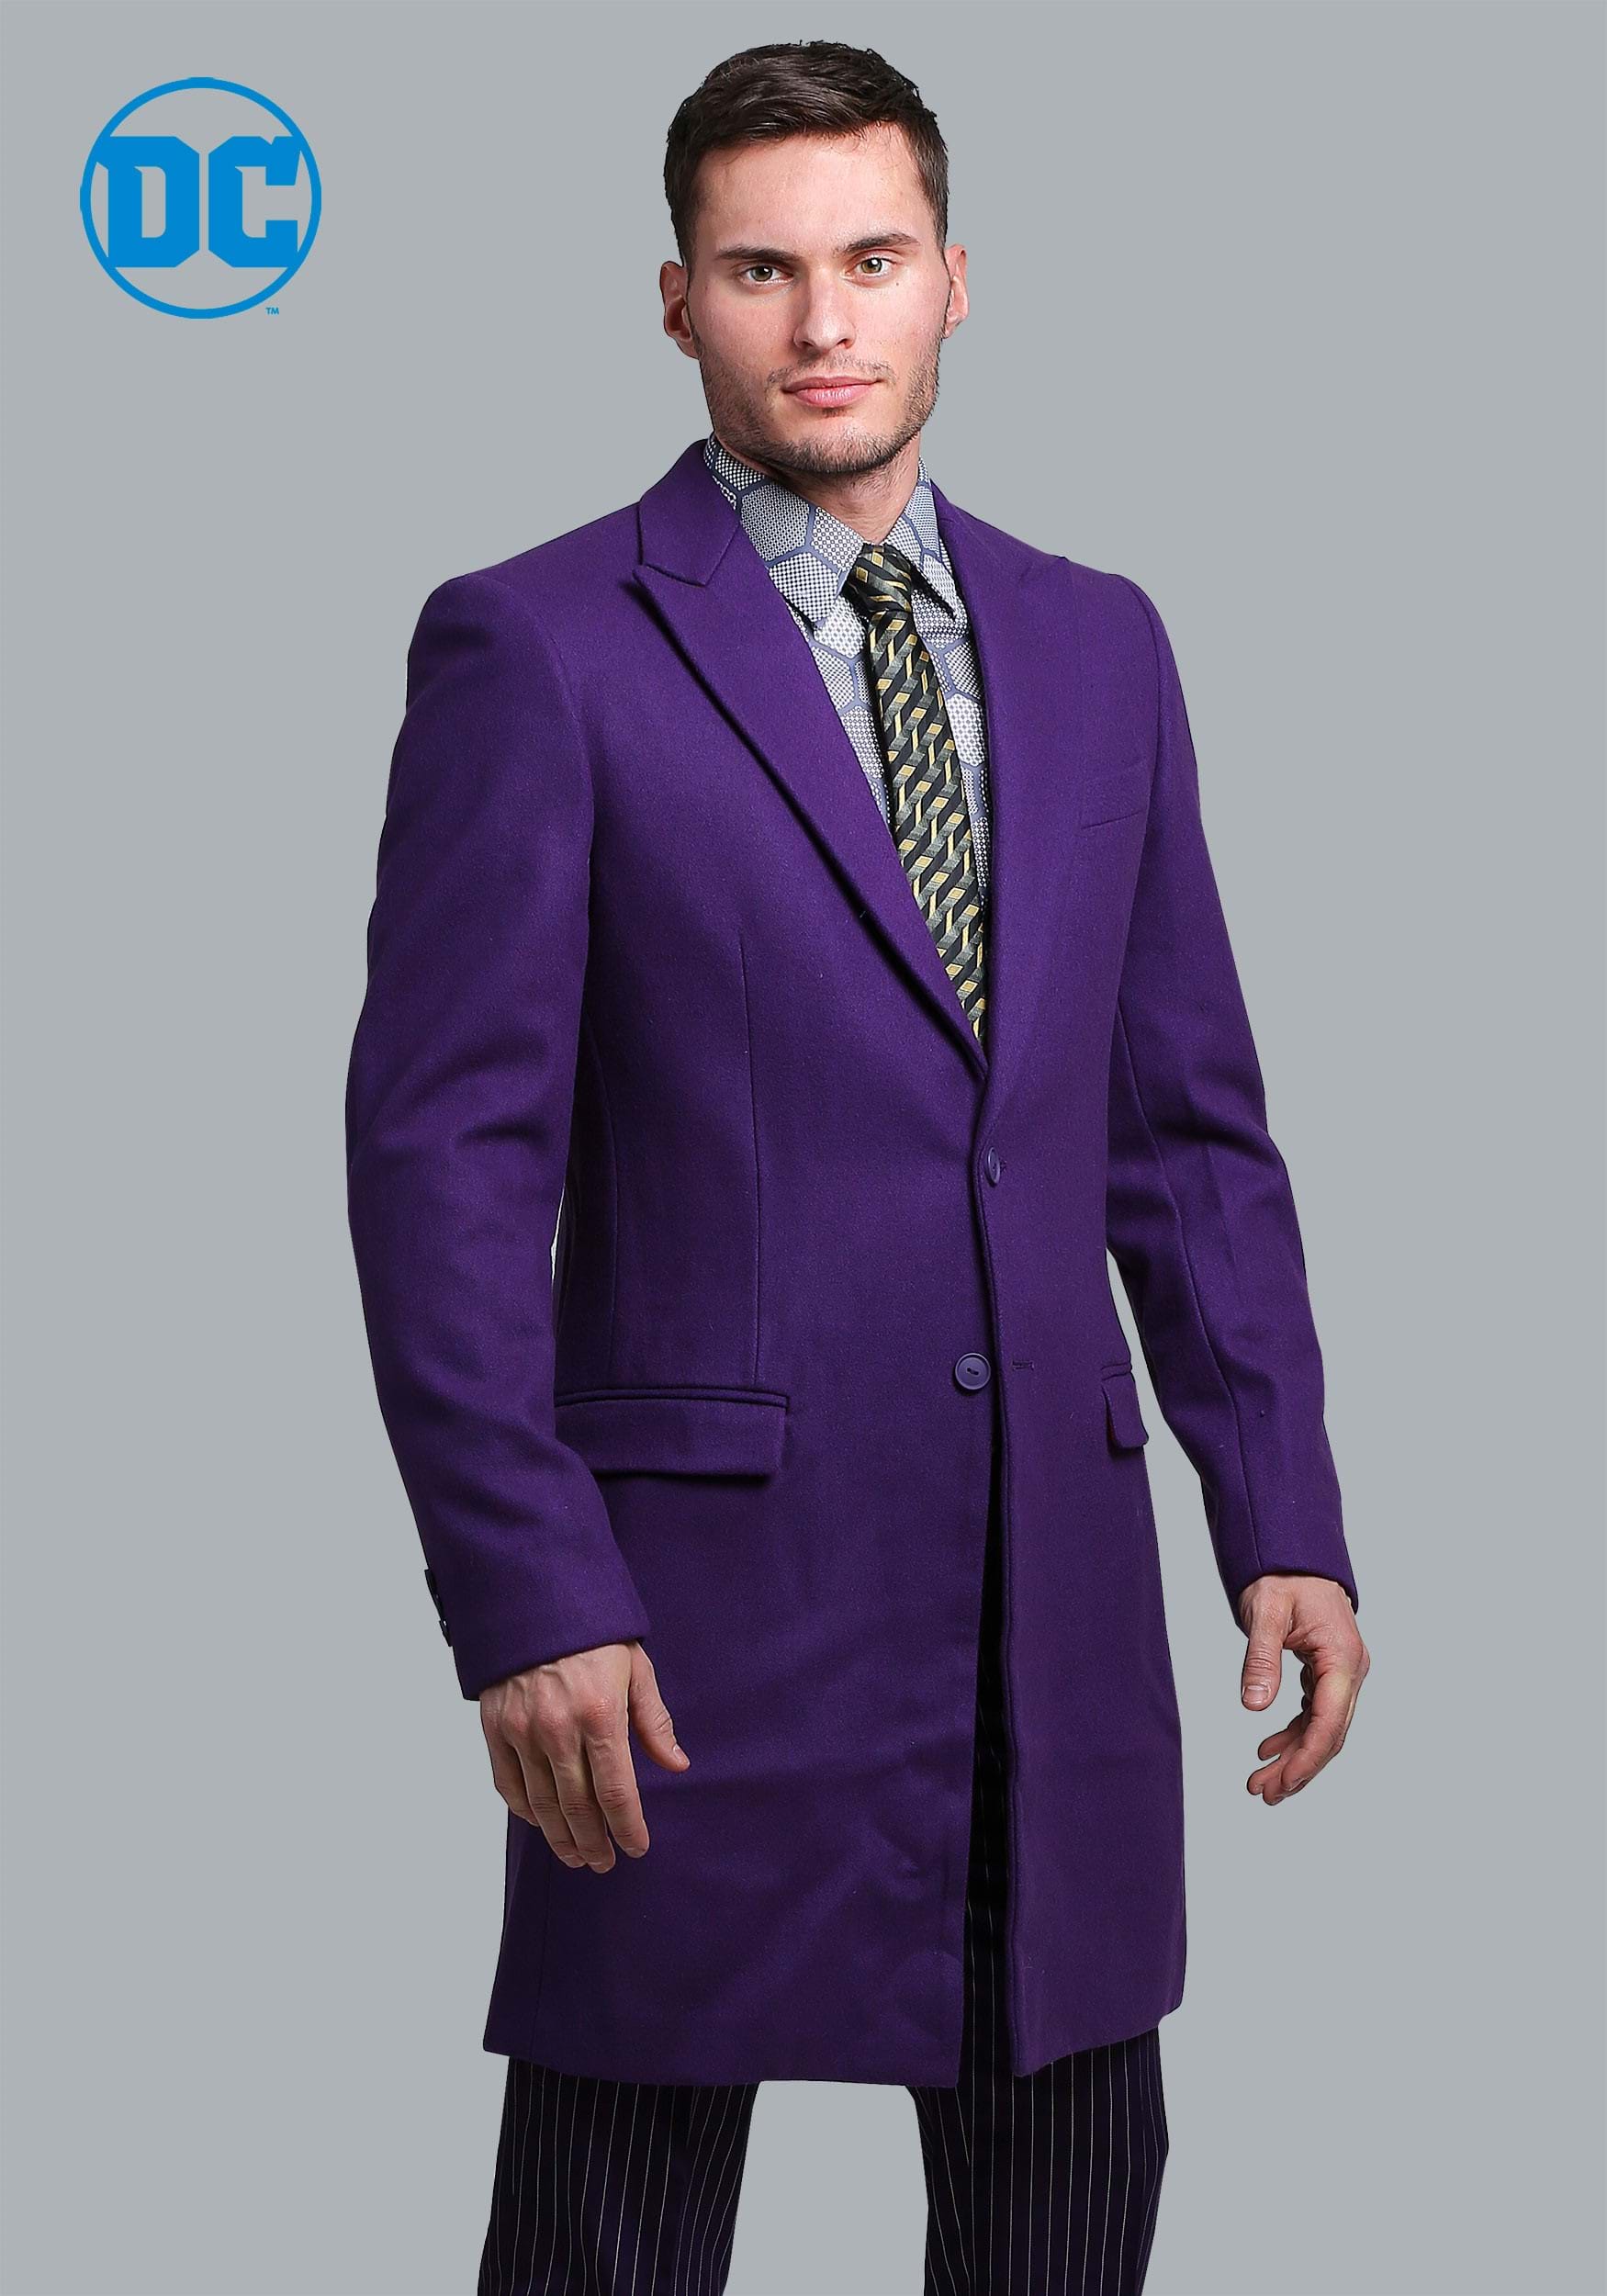 Halloween Party Cosplay Costume Heath Ledger The Joker Suit for Men Shirt  Vest Jacket Pants Full Sets